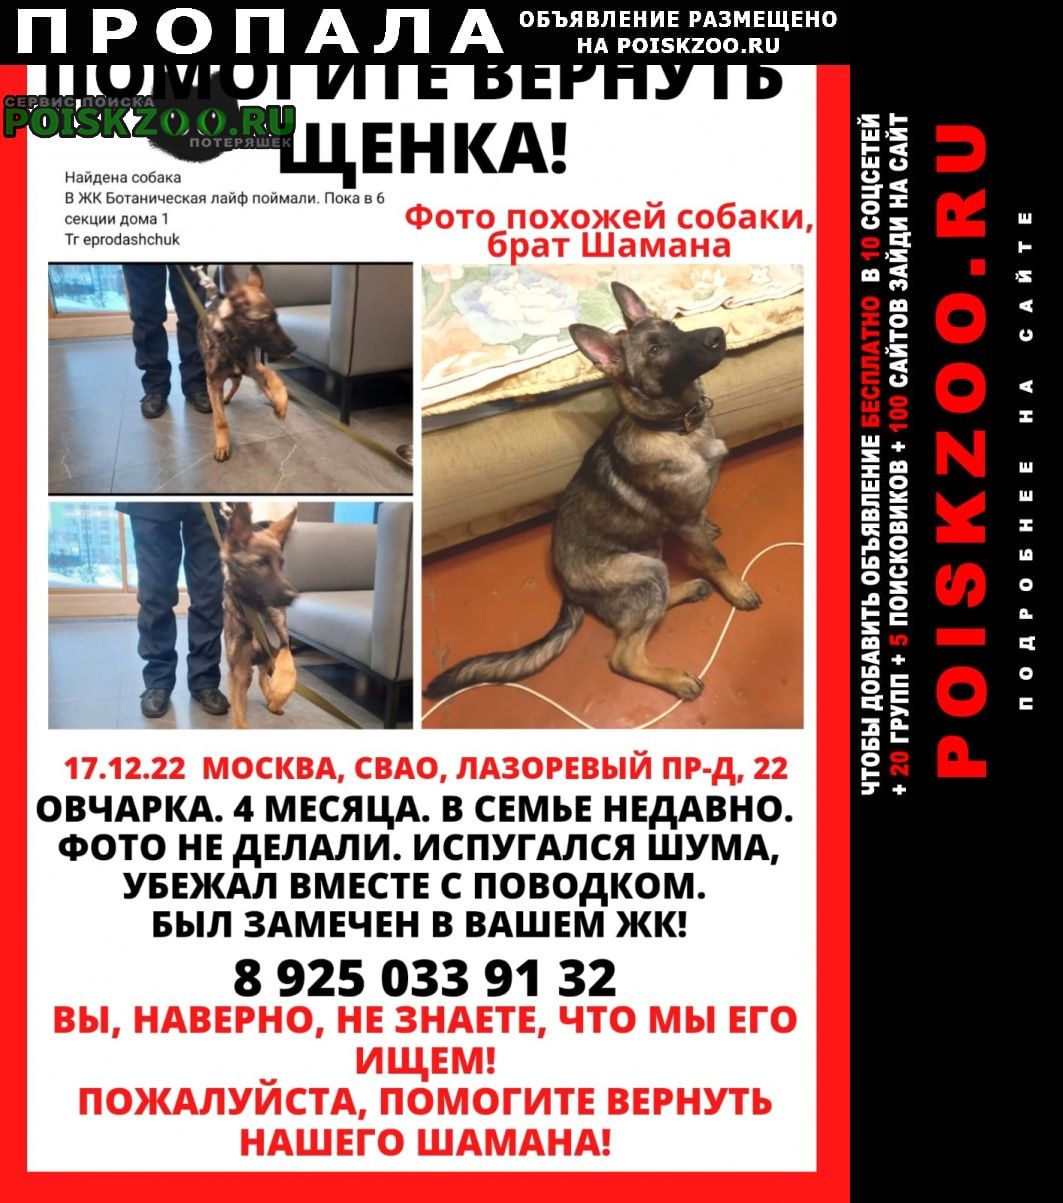 Пропала собака кобель помогите найти Москва